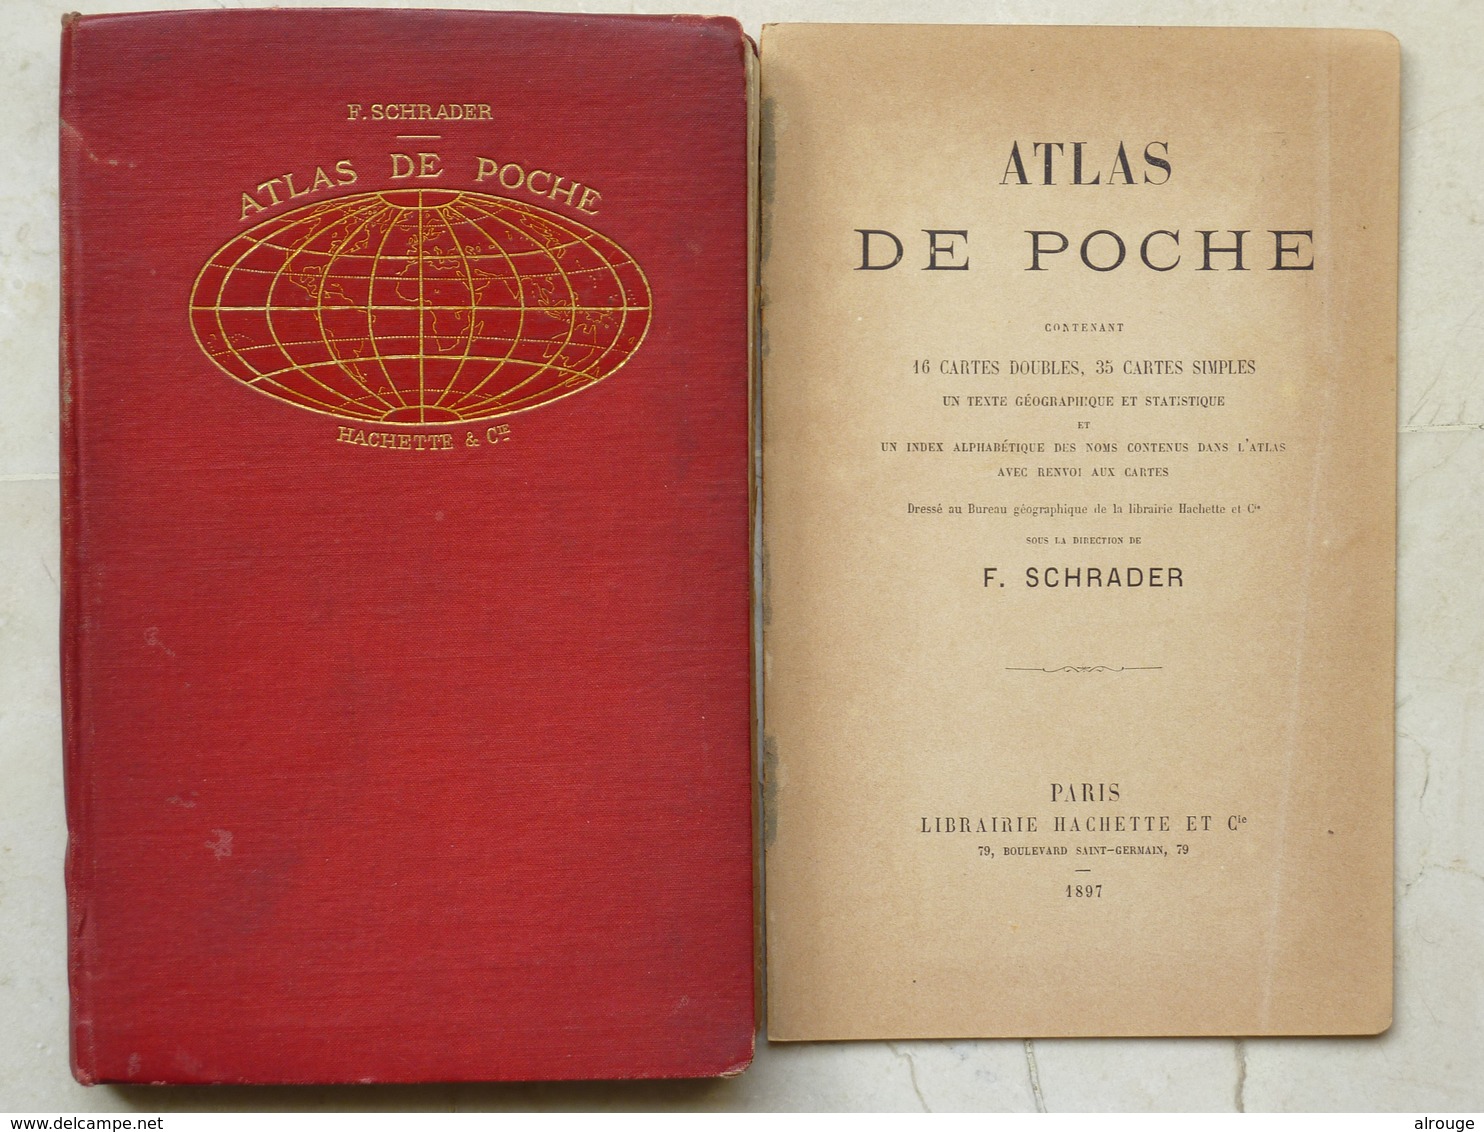 Atlas De Poche, F. Schrader, 1897 - Maps/Atlas